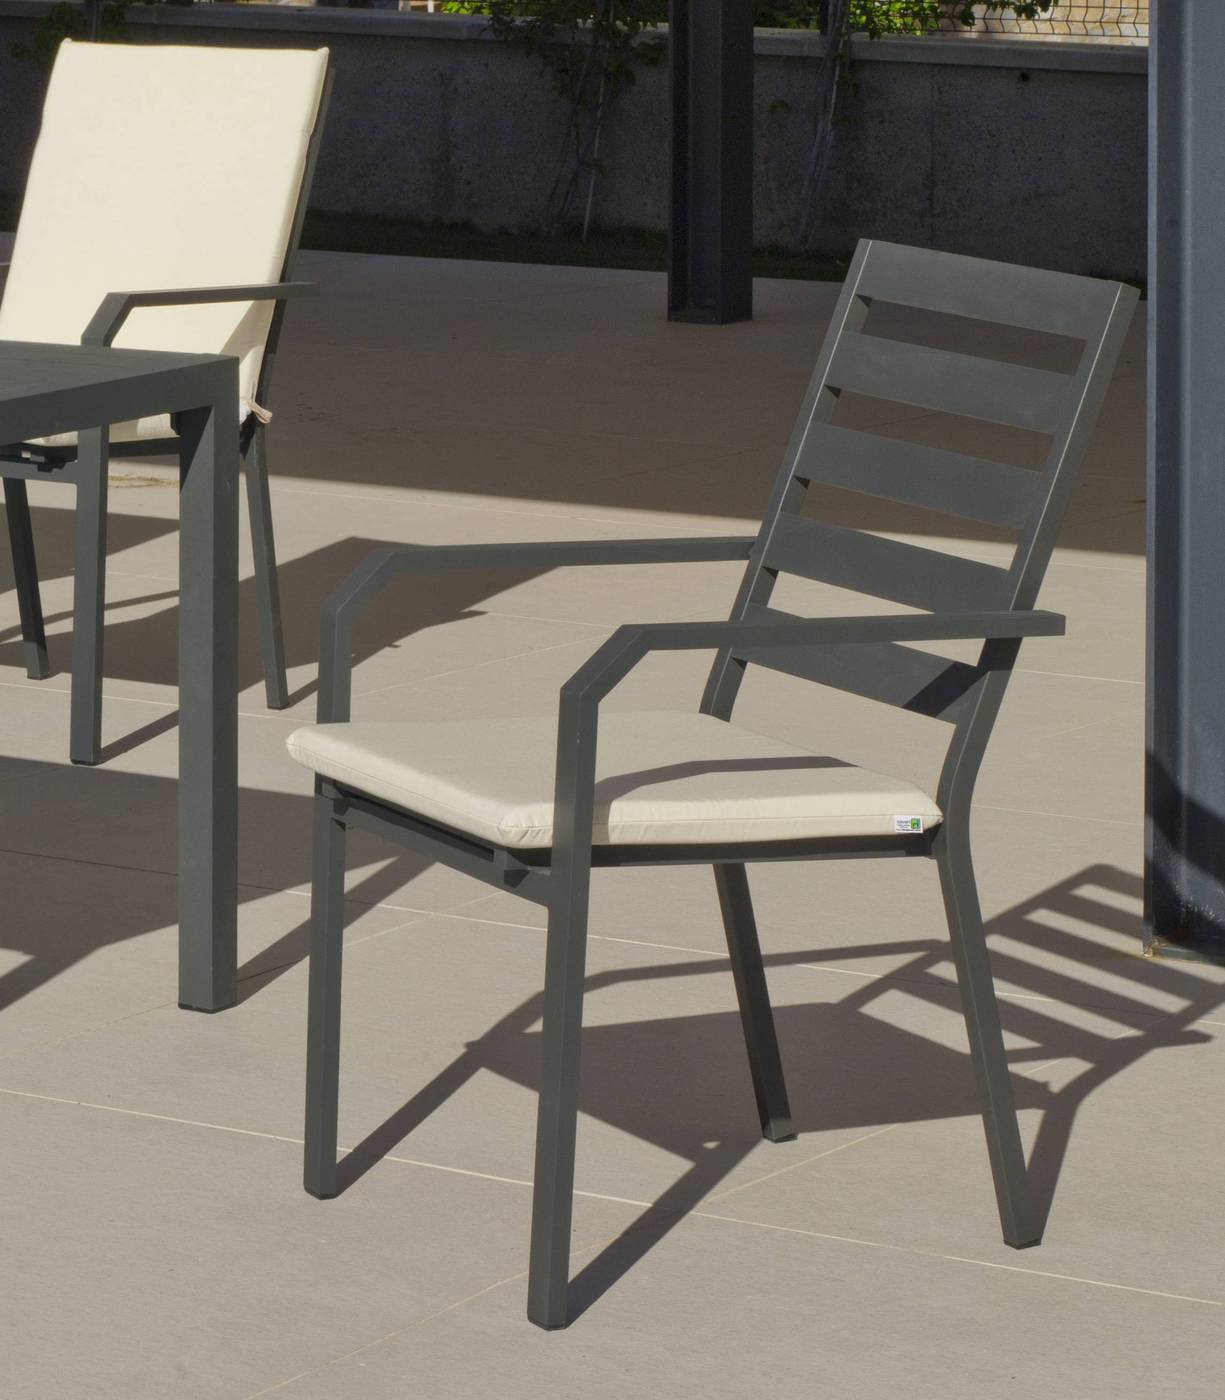 Set Aluminio Palma-Caravel 150-6 - Conjunto aluminio luxe: Mesa rectangular 150 cm + 6 sillones. Disponible en color blanco, plata, bronce, antracita y champagne.